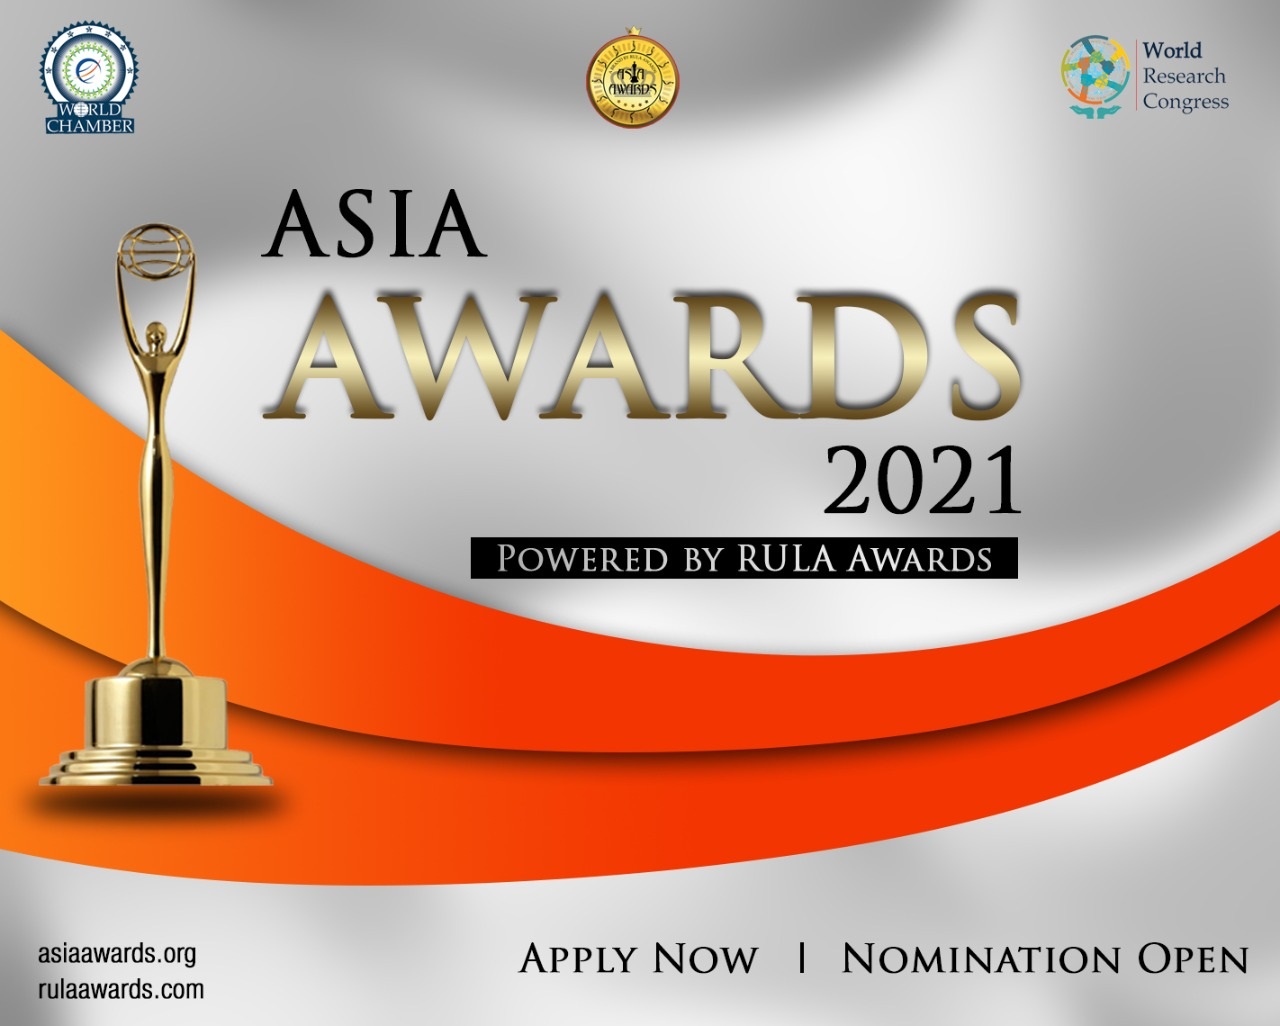 Dr Premnath Genisan has bagged Asia's Outstanding Entrepreneur Award